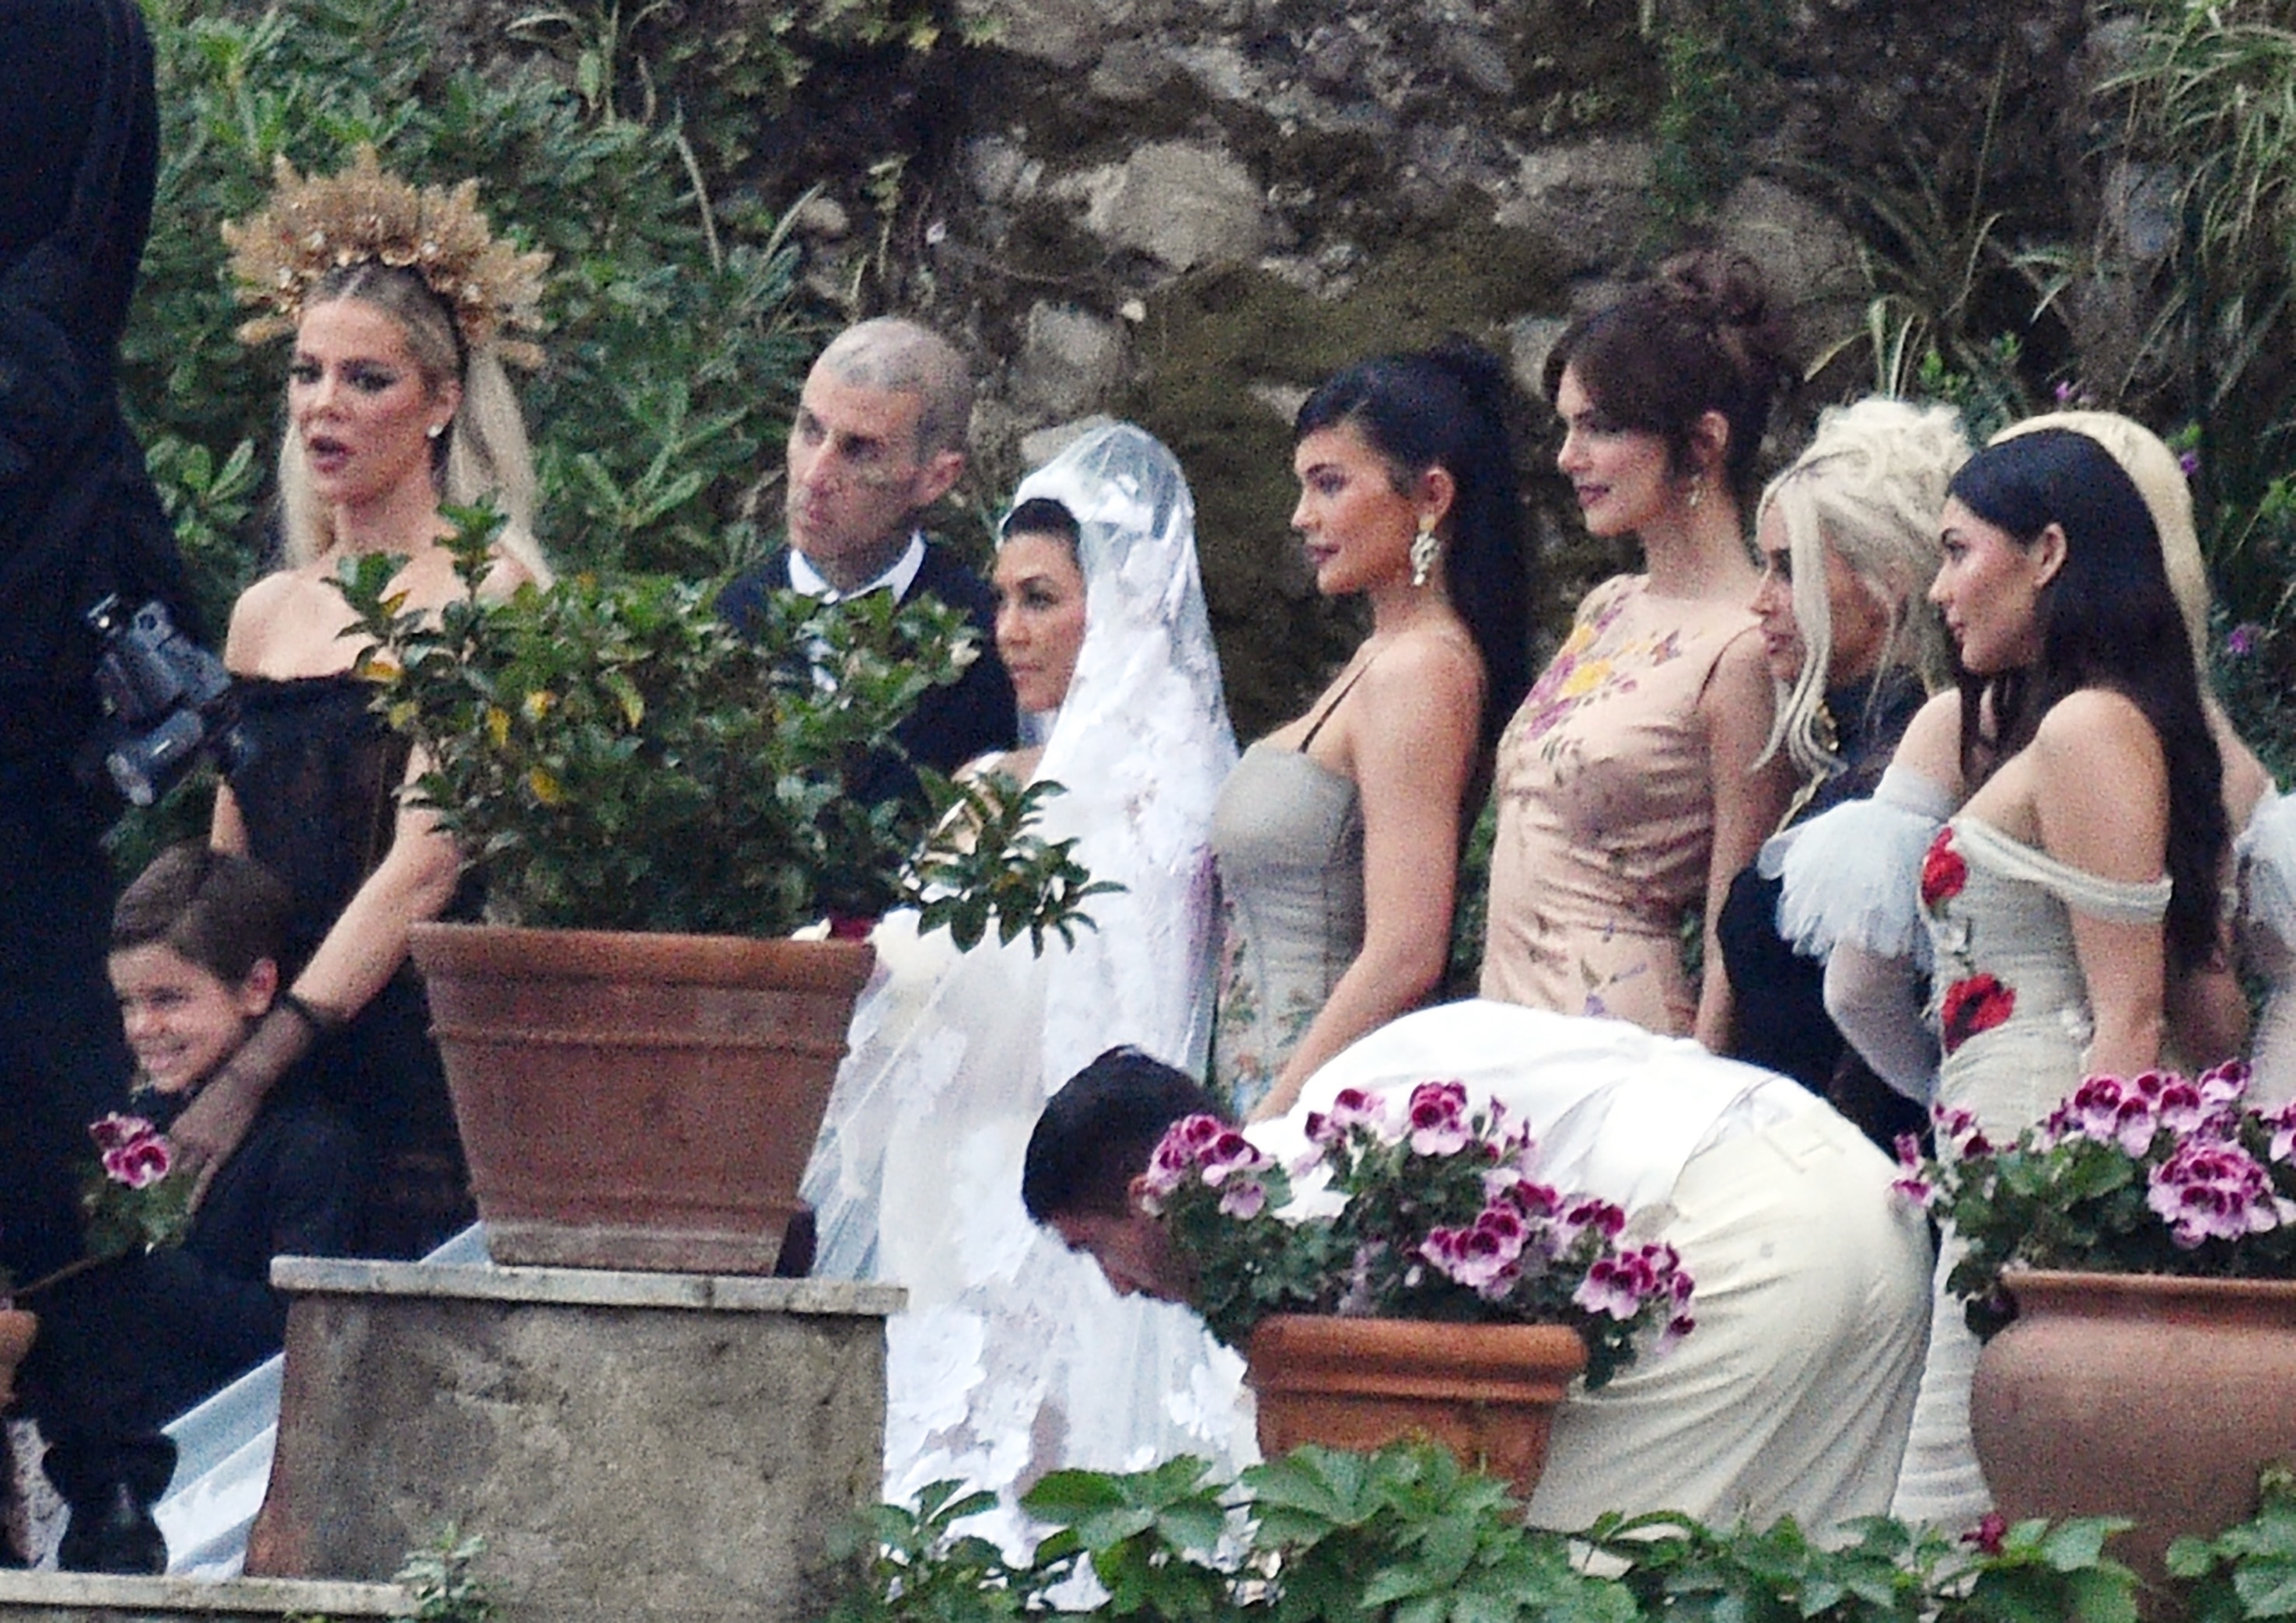 The Kardashians take over Italy ahead of Kourtney Kardashian's wedding